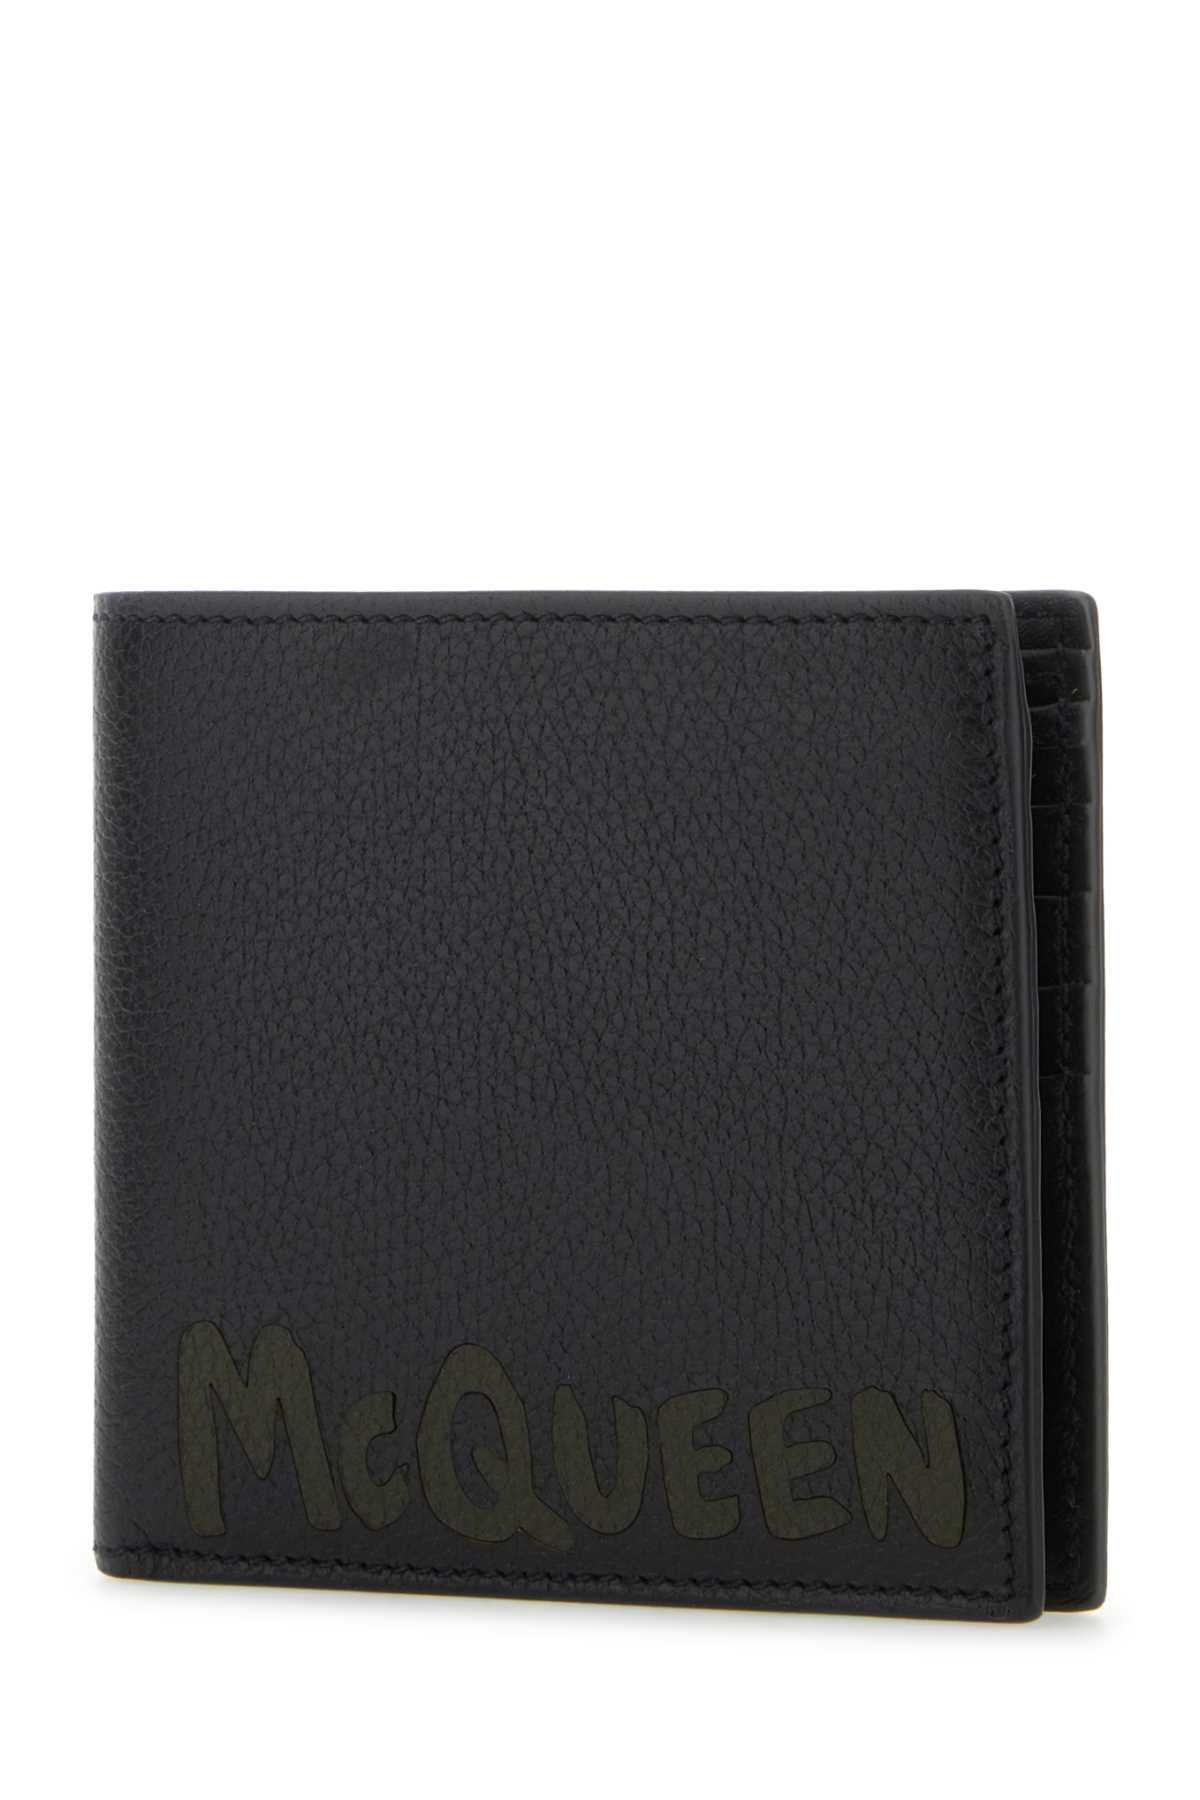 Alexander Mcqueen Black Leather Wallet In Blackkhaki